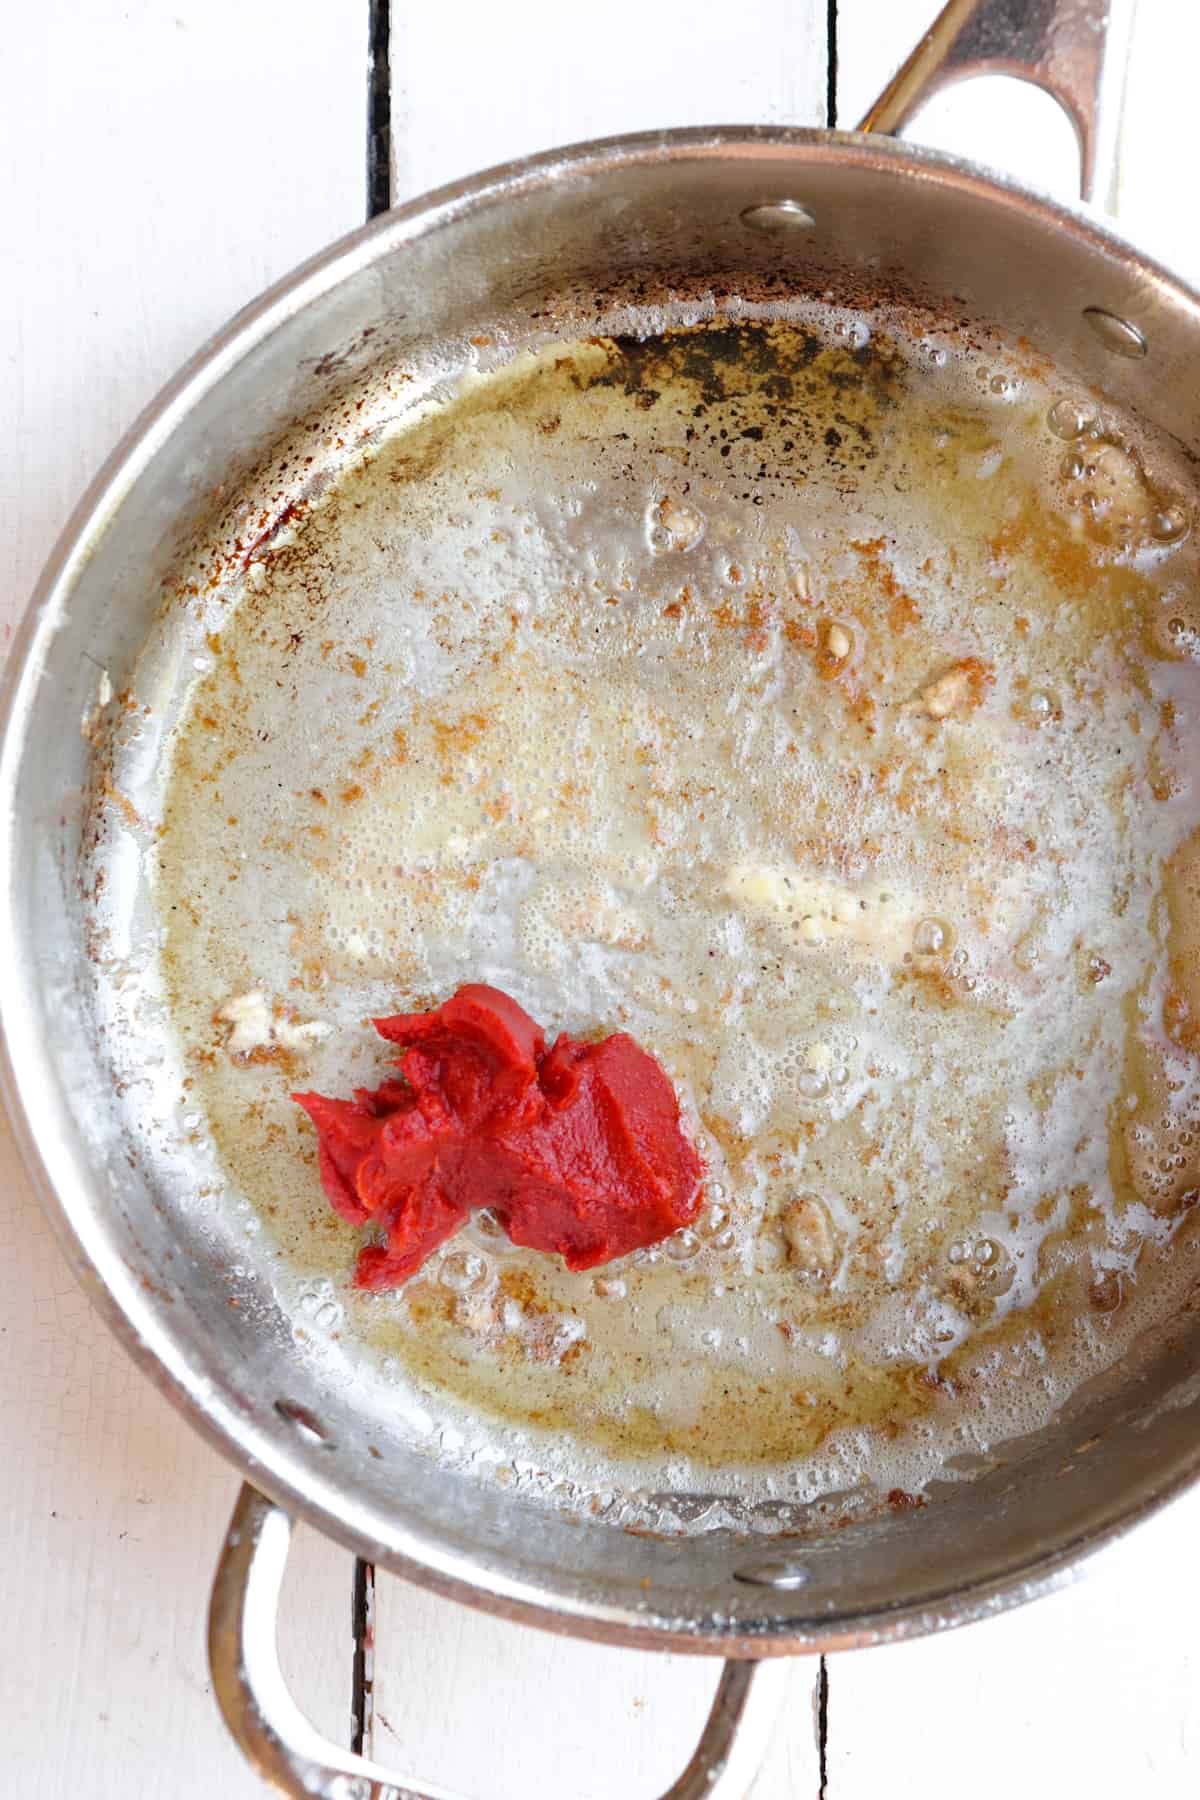 tomato paste spooned into a pan.